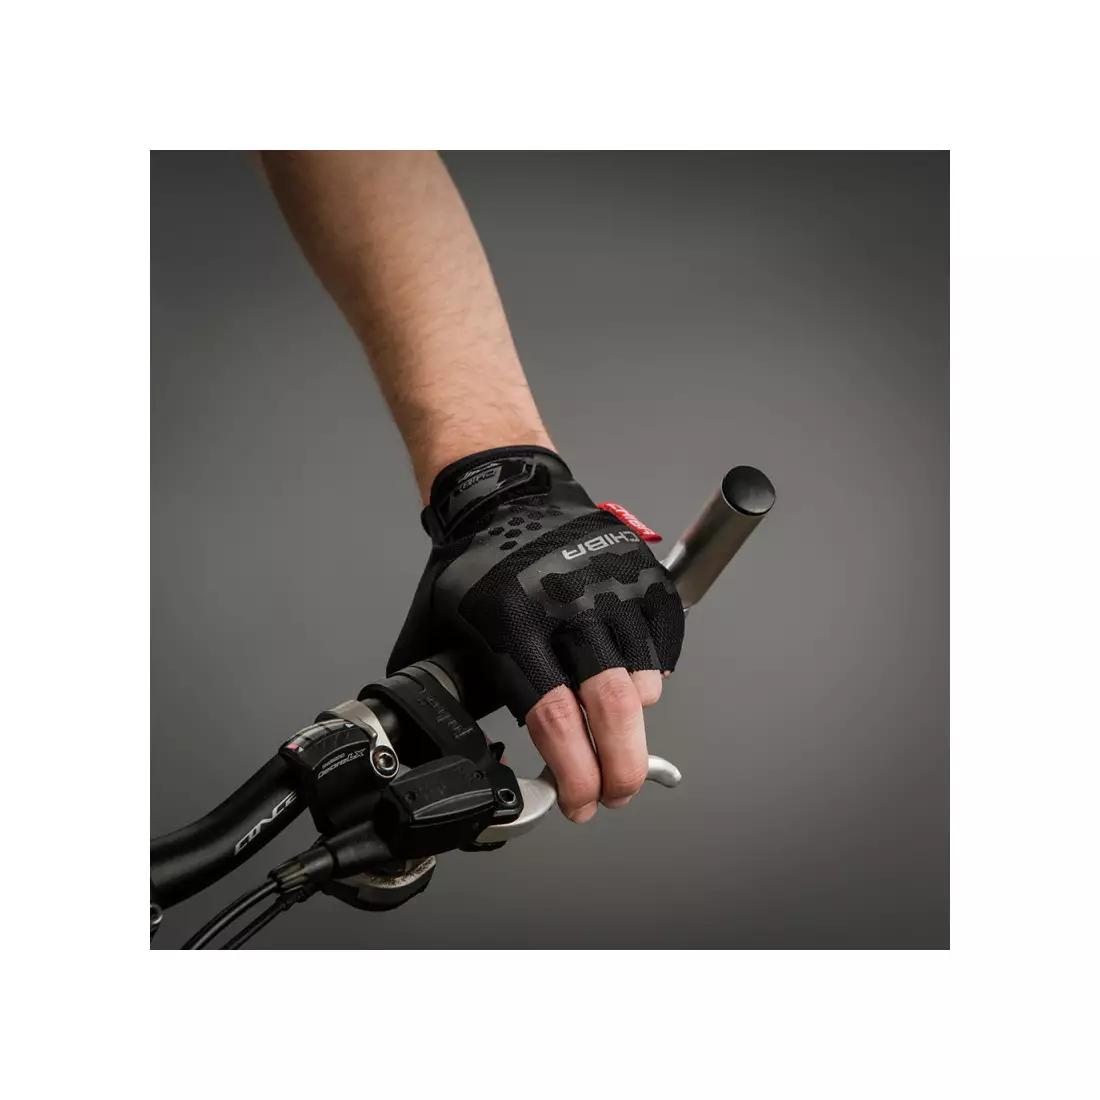 CHIBA PROFESSIONAL II cyklistické rukavice černé 3040719